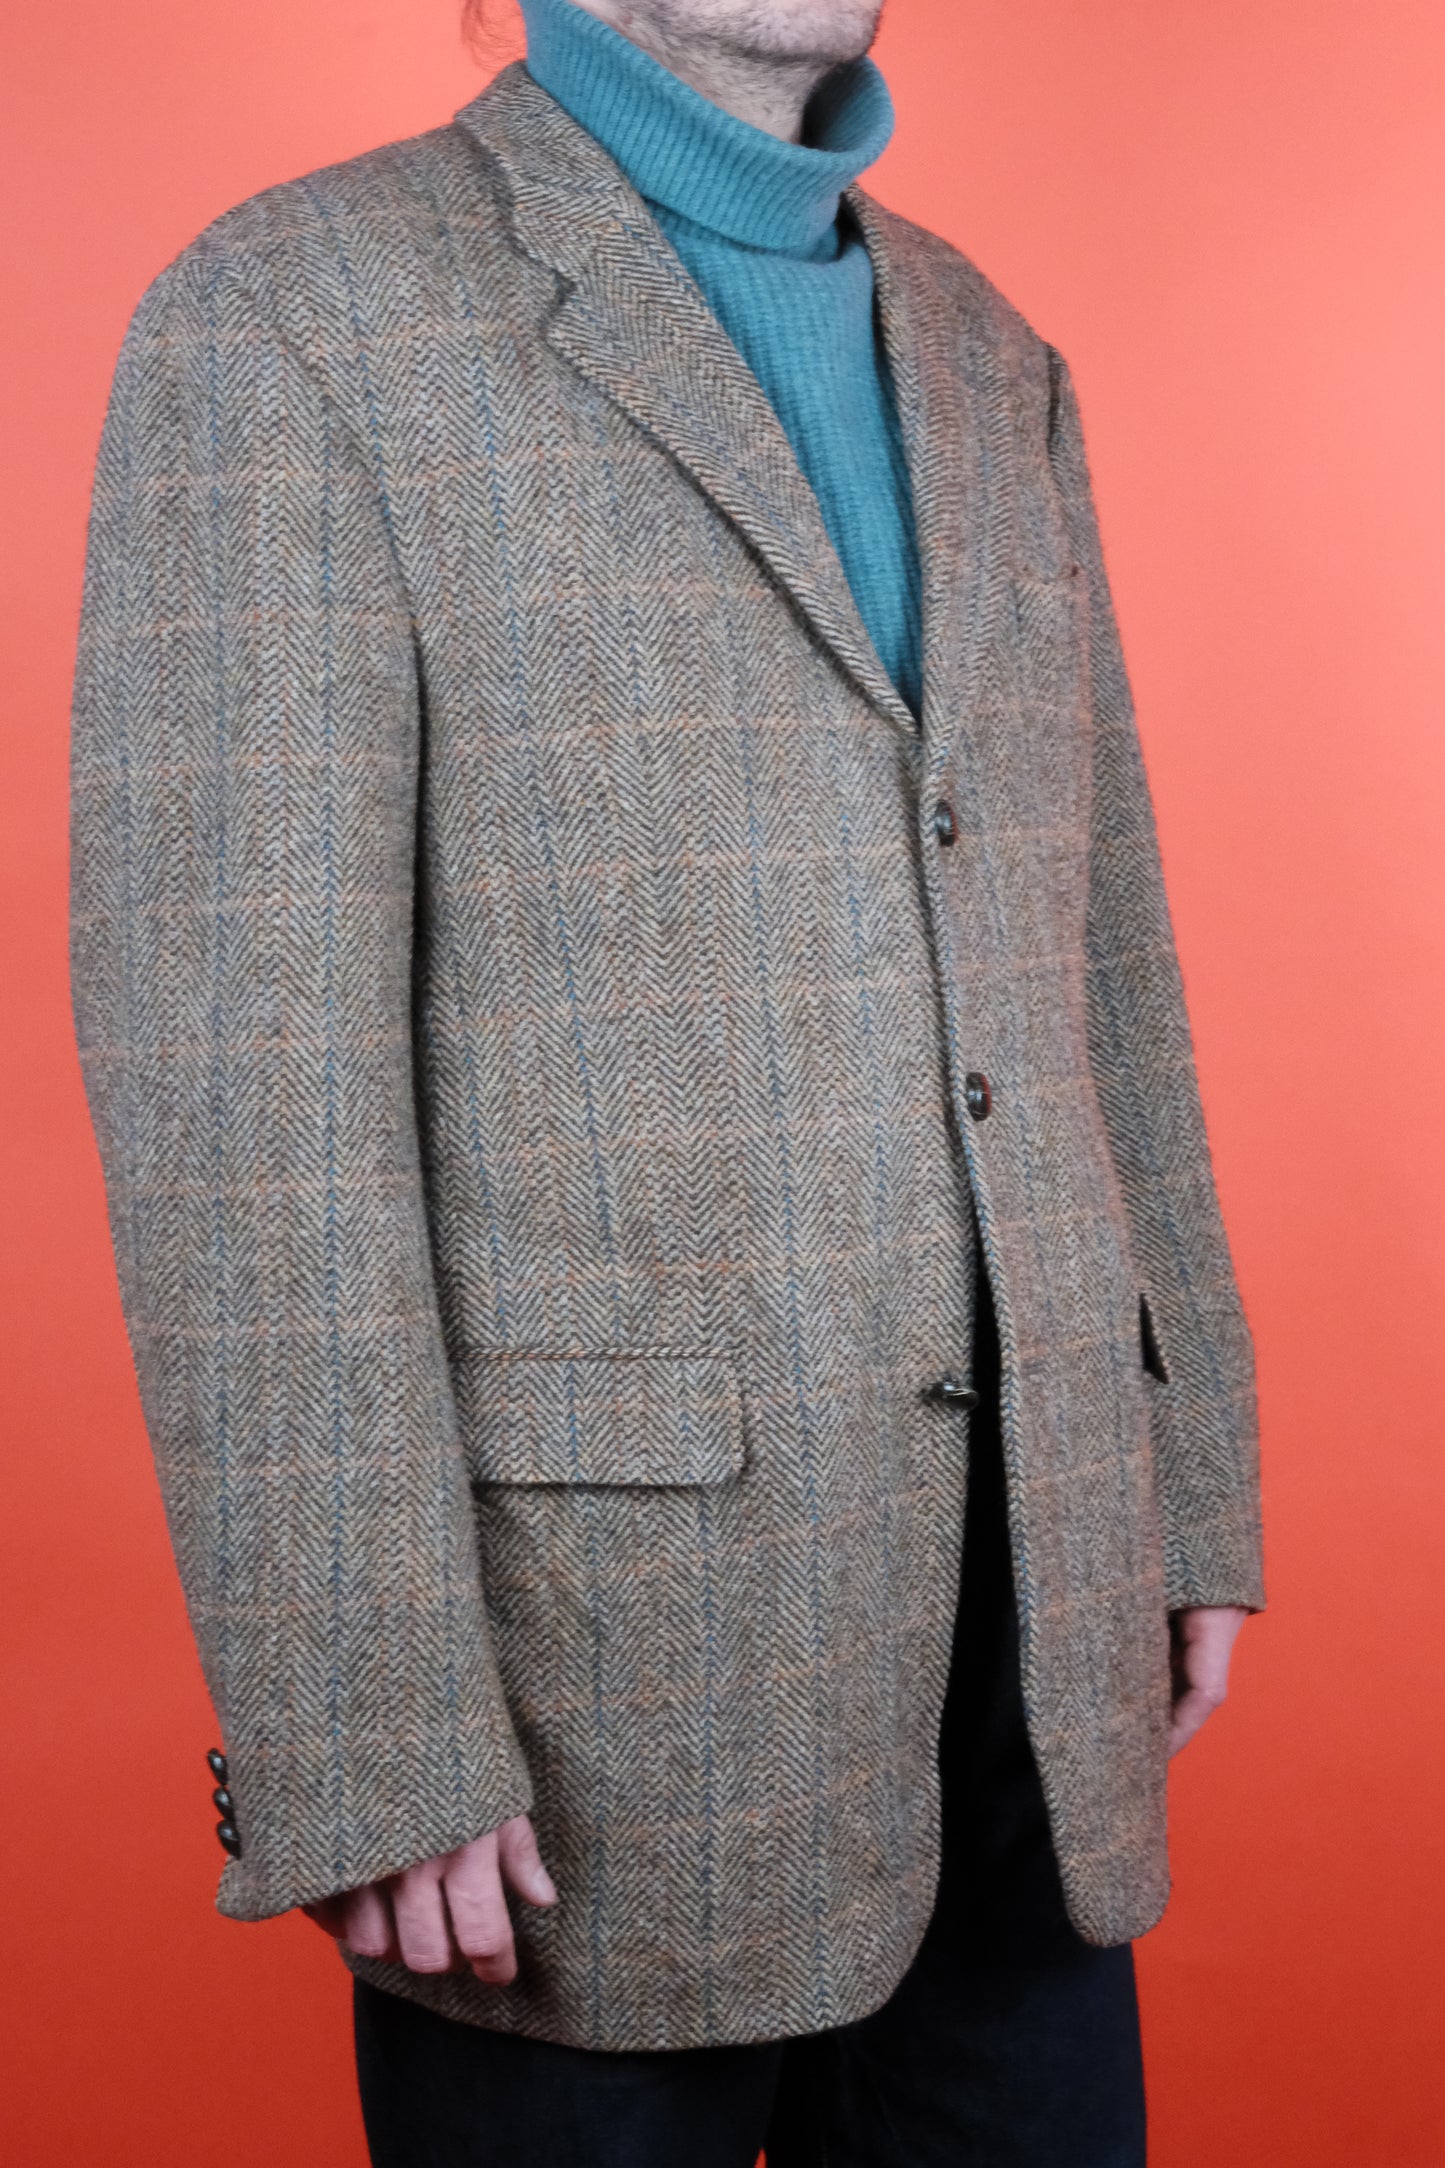 Konen Harrris Tweed Suit Jacket 'XL' - vintage clothing clochard92.com